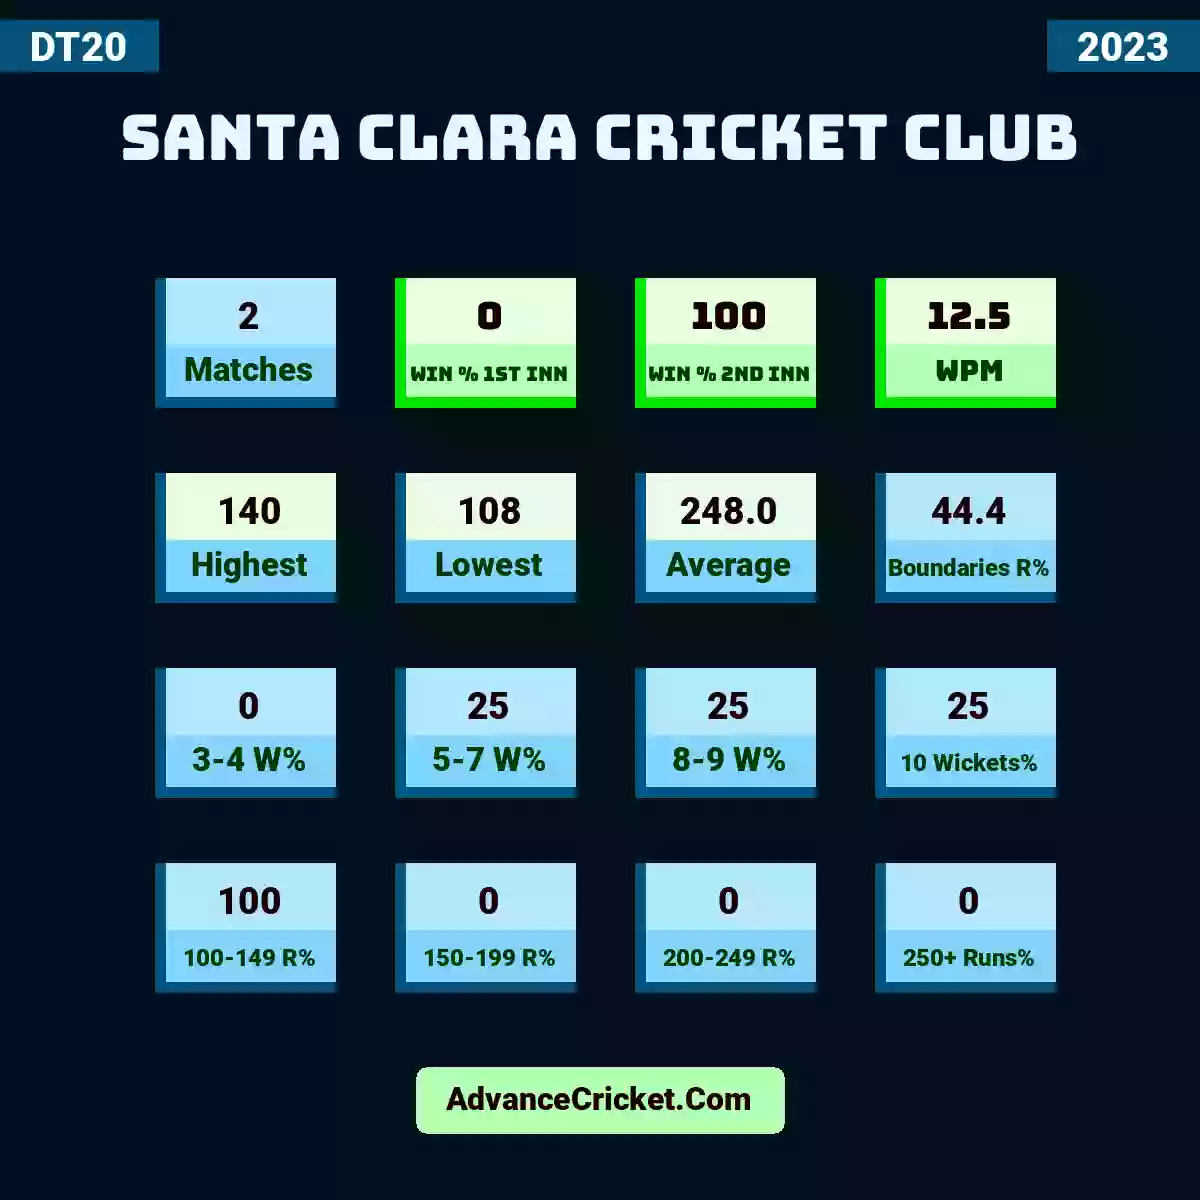 Image showing Santa Clara Cricket Club with Matches: 2, Win % 1st Inn: 0, Win % 2nd Inn: 100, WPM: 12.5, Highest: 140, Lowest: 108, Average: 248.0, Boundaries R%: 44.4, 3-4 W%: 0, 5-7 W%: 25, 8-9 W%: 25, 10 Wickets%: 25, 100-149 R%: 100, 150-199 R%: 0, 200-249 R%: 0, 250+ Runs%: 0.